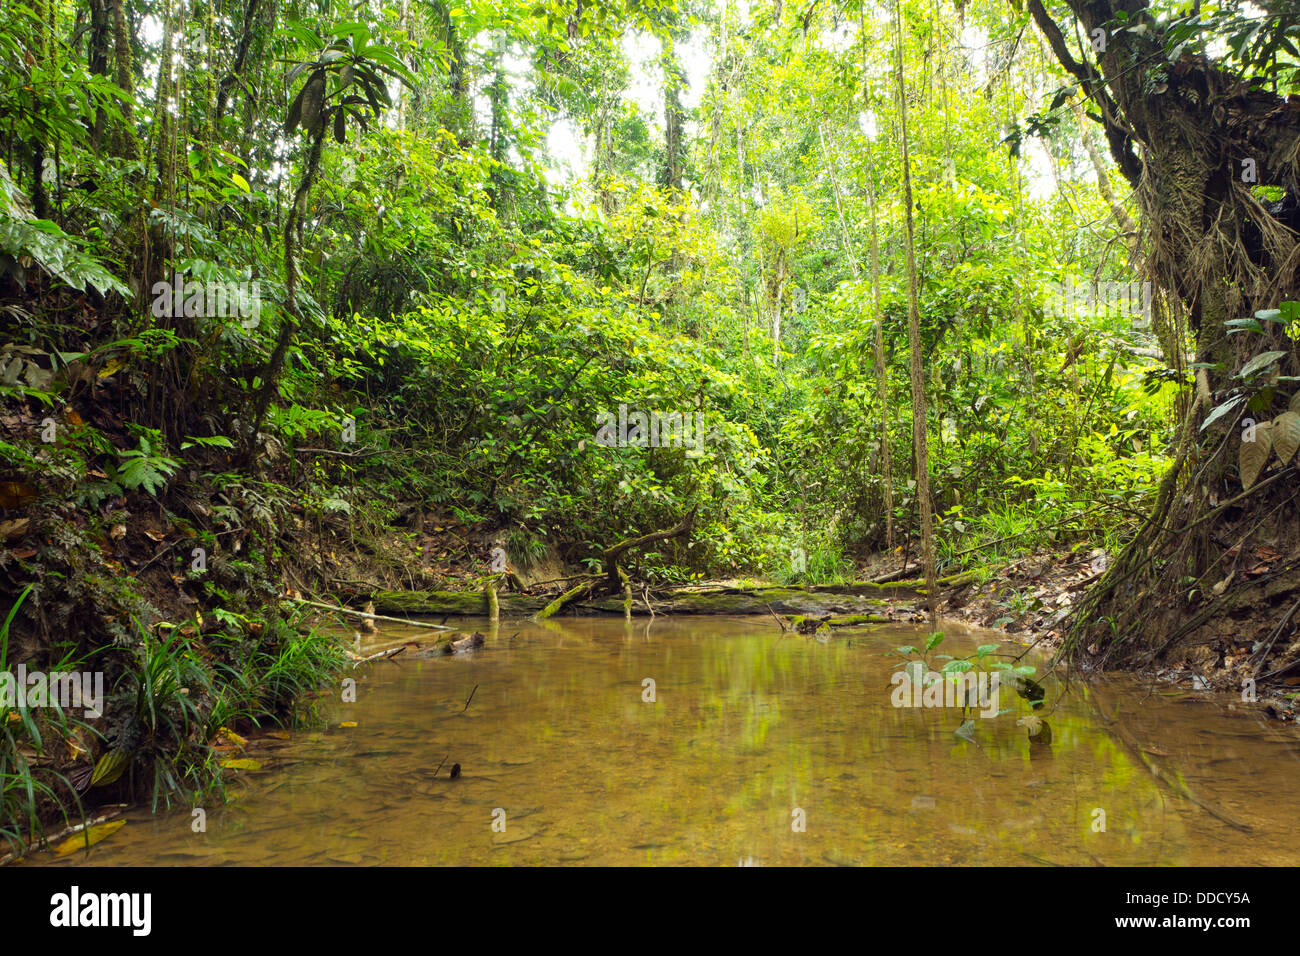 A shady rainforest stream in the Ecuadorian Amazon Stock Photo